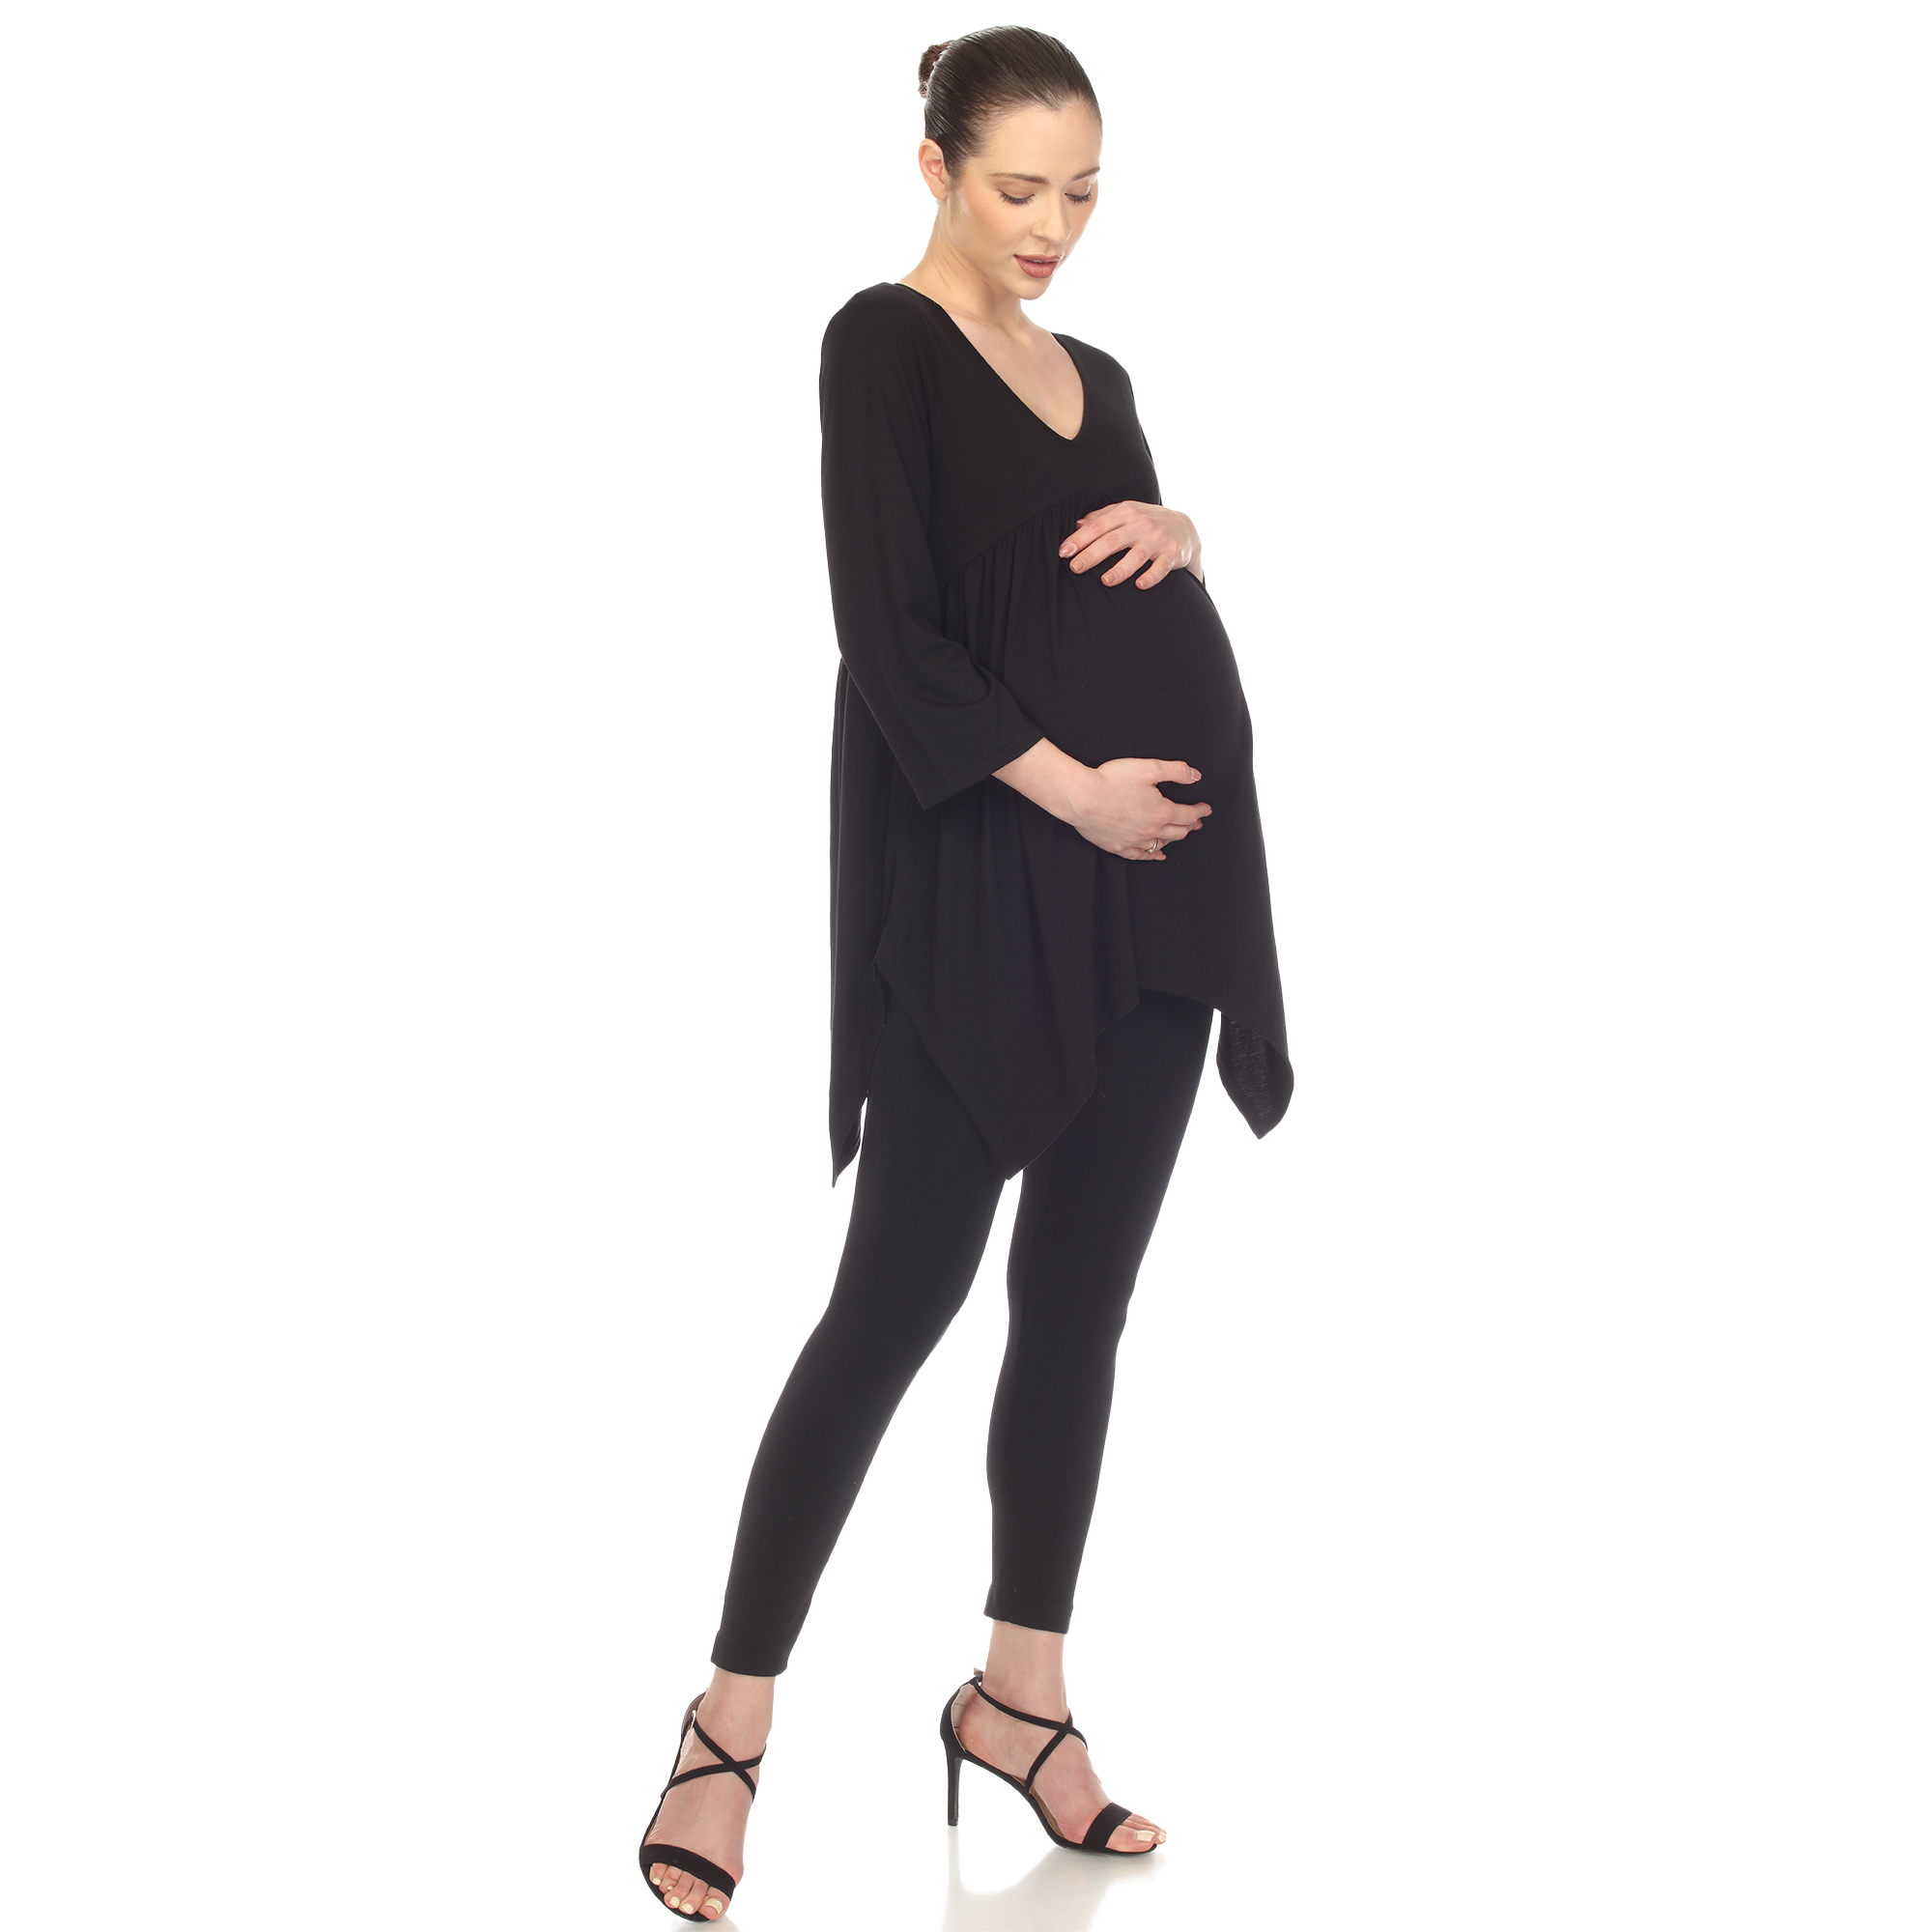 White Mark Women's Maternity Empire Waist V-Neck Tunic Top - Black, 1X